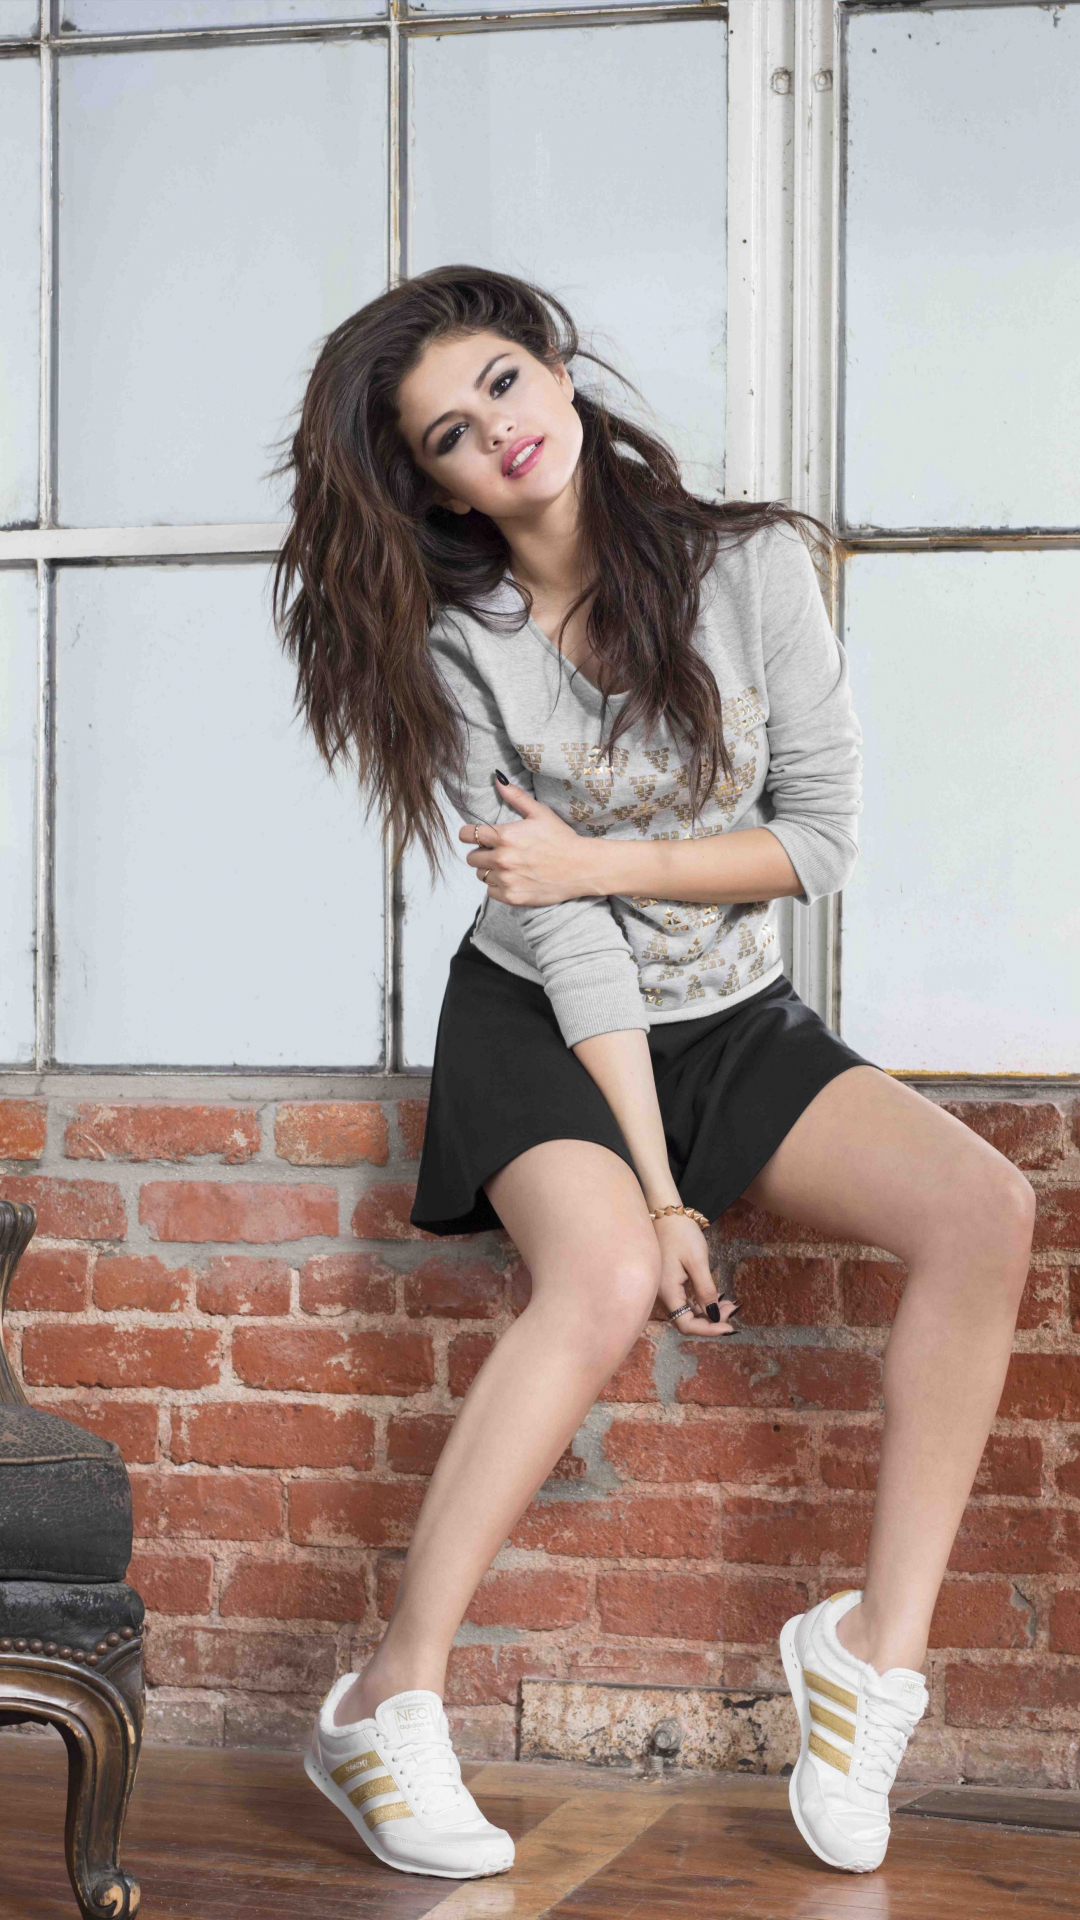 Download 1080x1920 Wallpaper Selena Gomez Adidas Neo Photoshoot